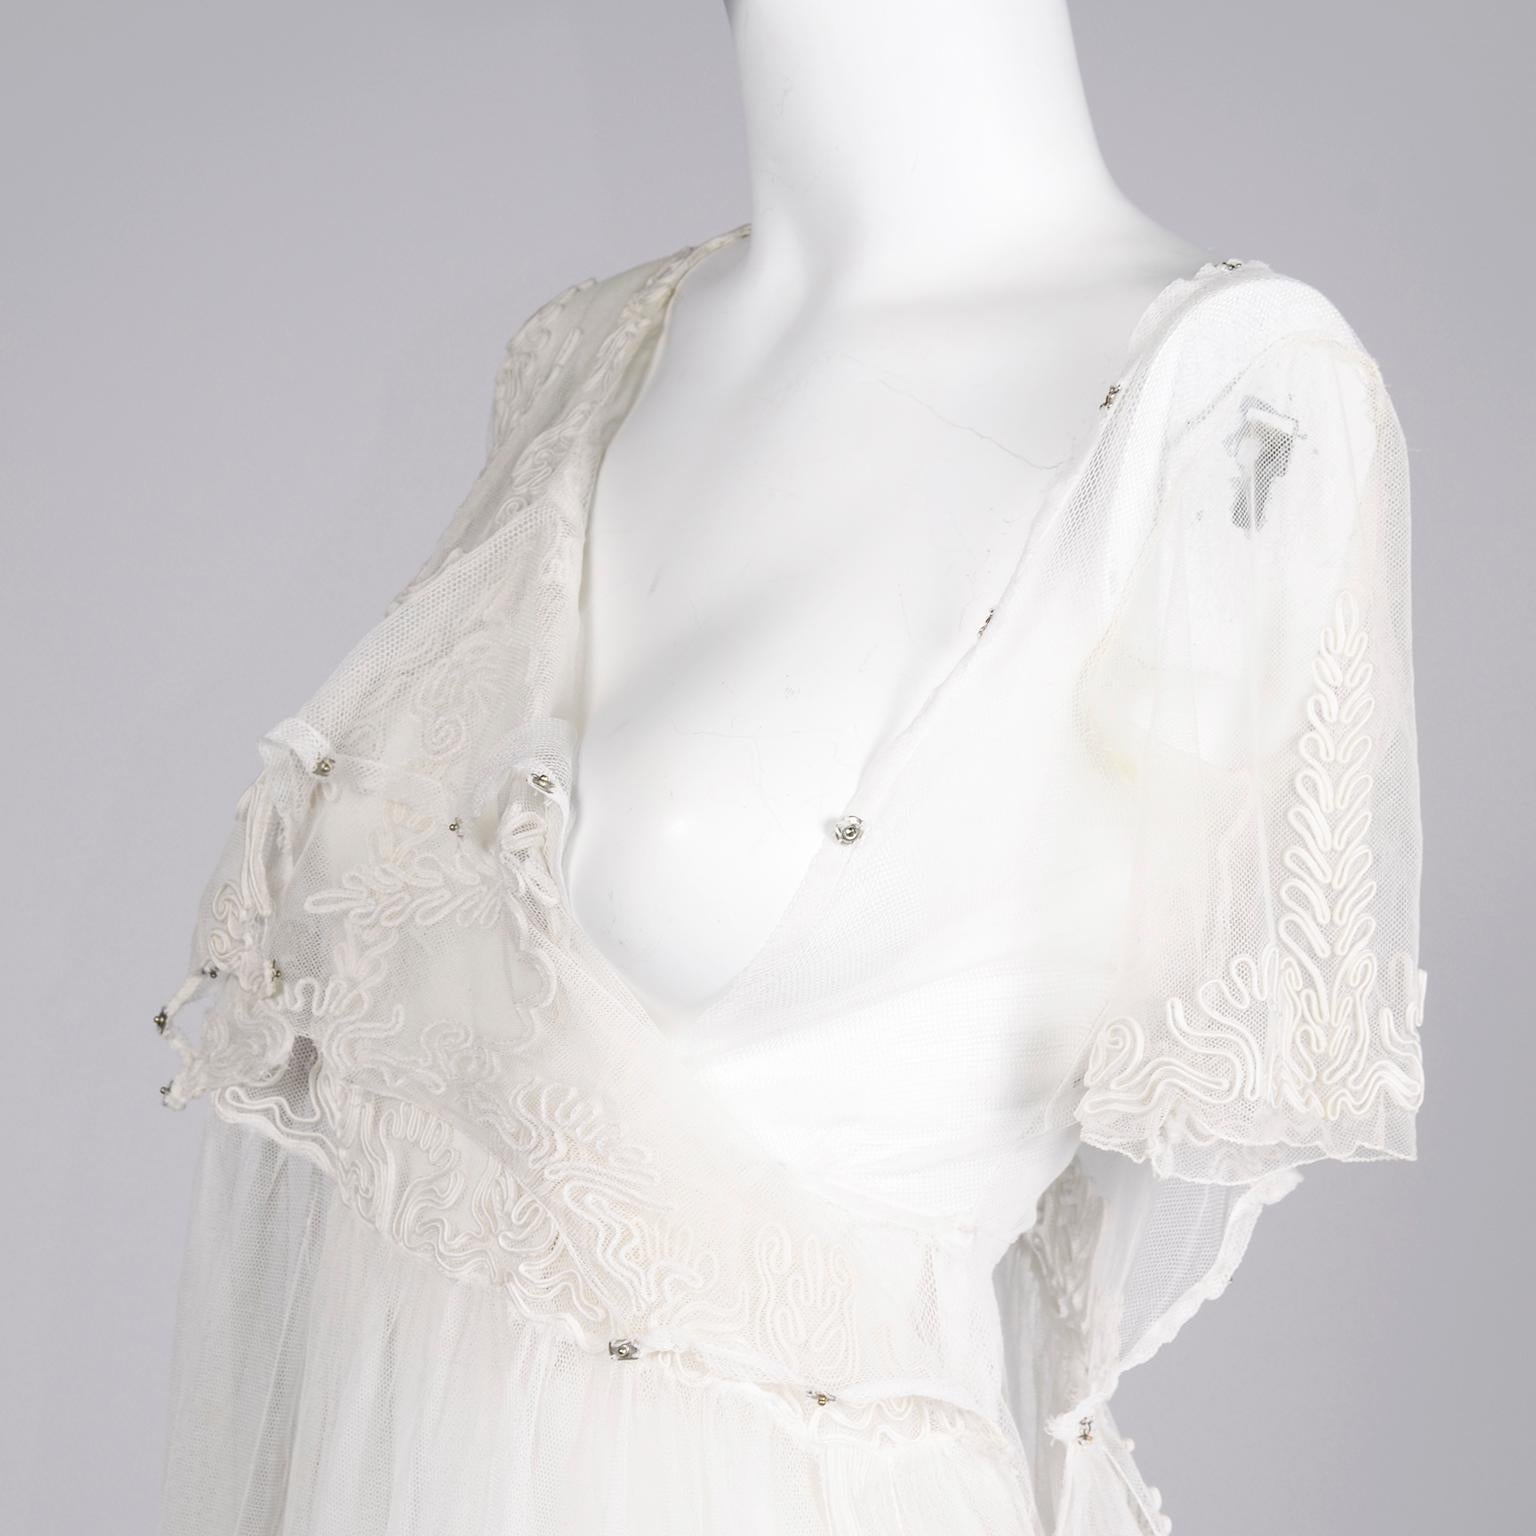 Antique Edwardian 1910s Vintage Ivory Net Tulle Dress W Soutache Embroidery Trim For Sale 8